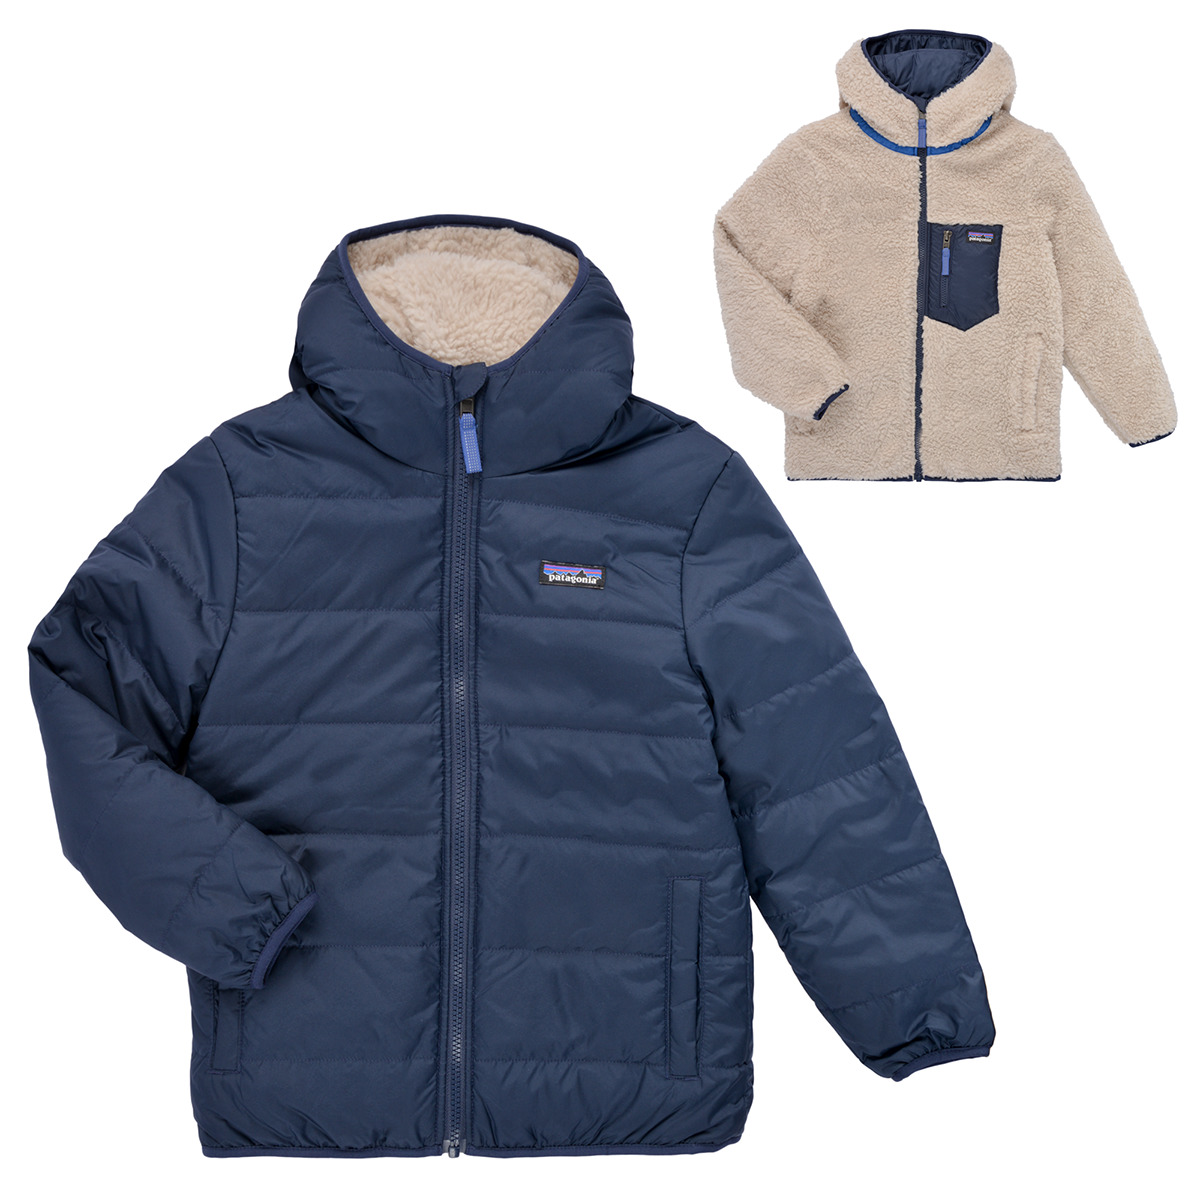 patagonia  reversible ready freddy hoody  boys's children's jacket in marine